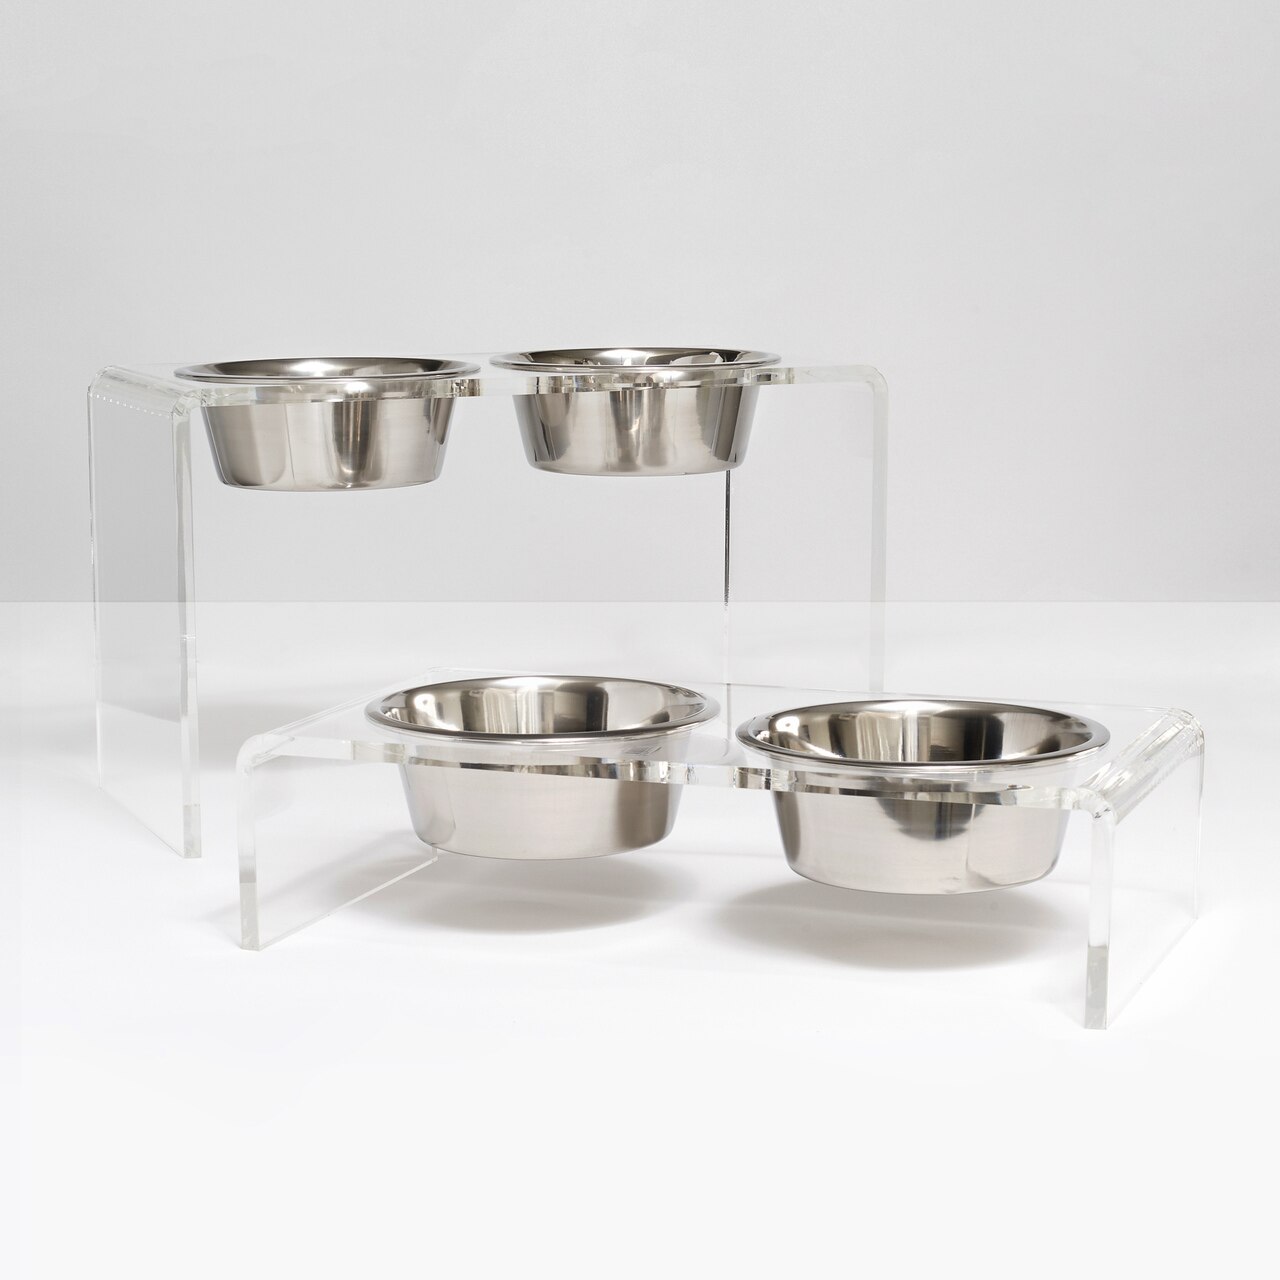 hiddin.co-clear-lucite-acrylic-modern-double-elevated-big-tall-dog-feeder-feeding-bowls.jpg